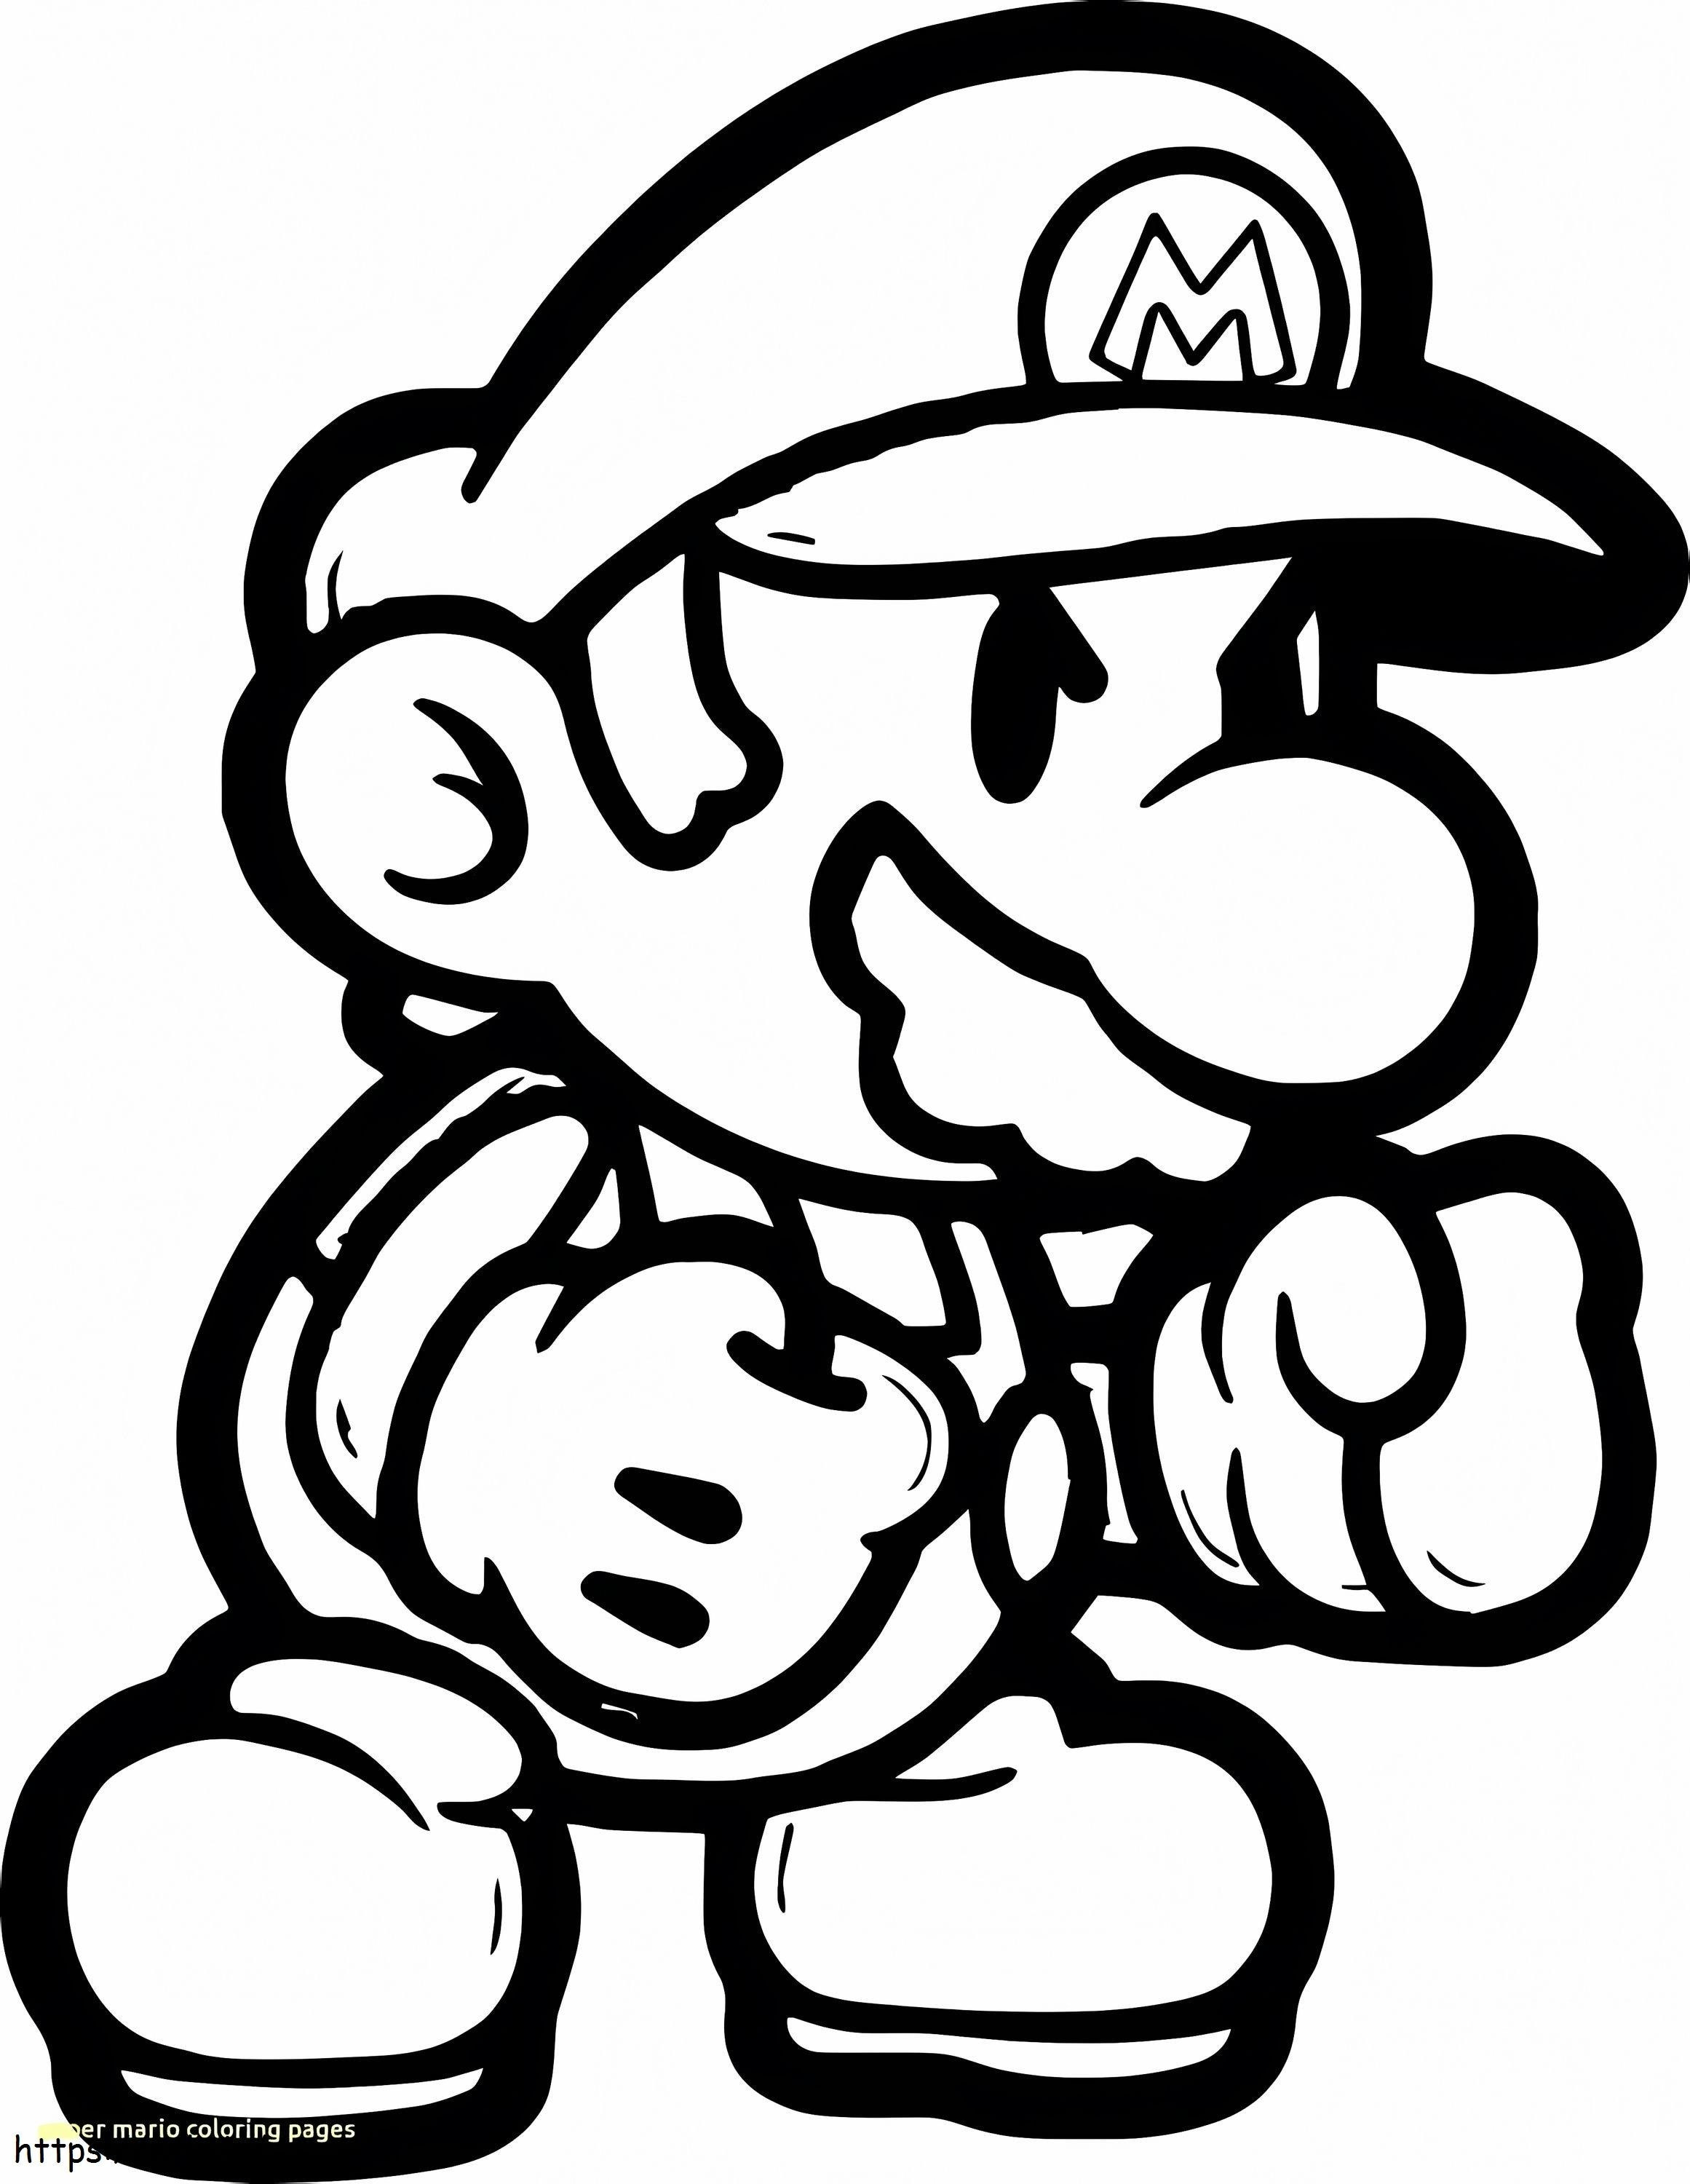 Chibi Mario coloring page